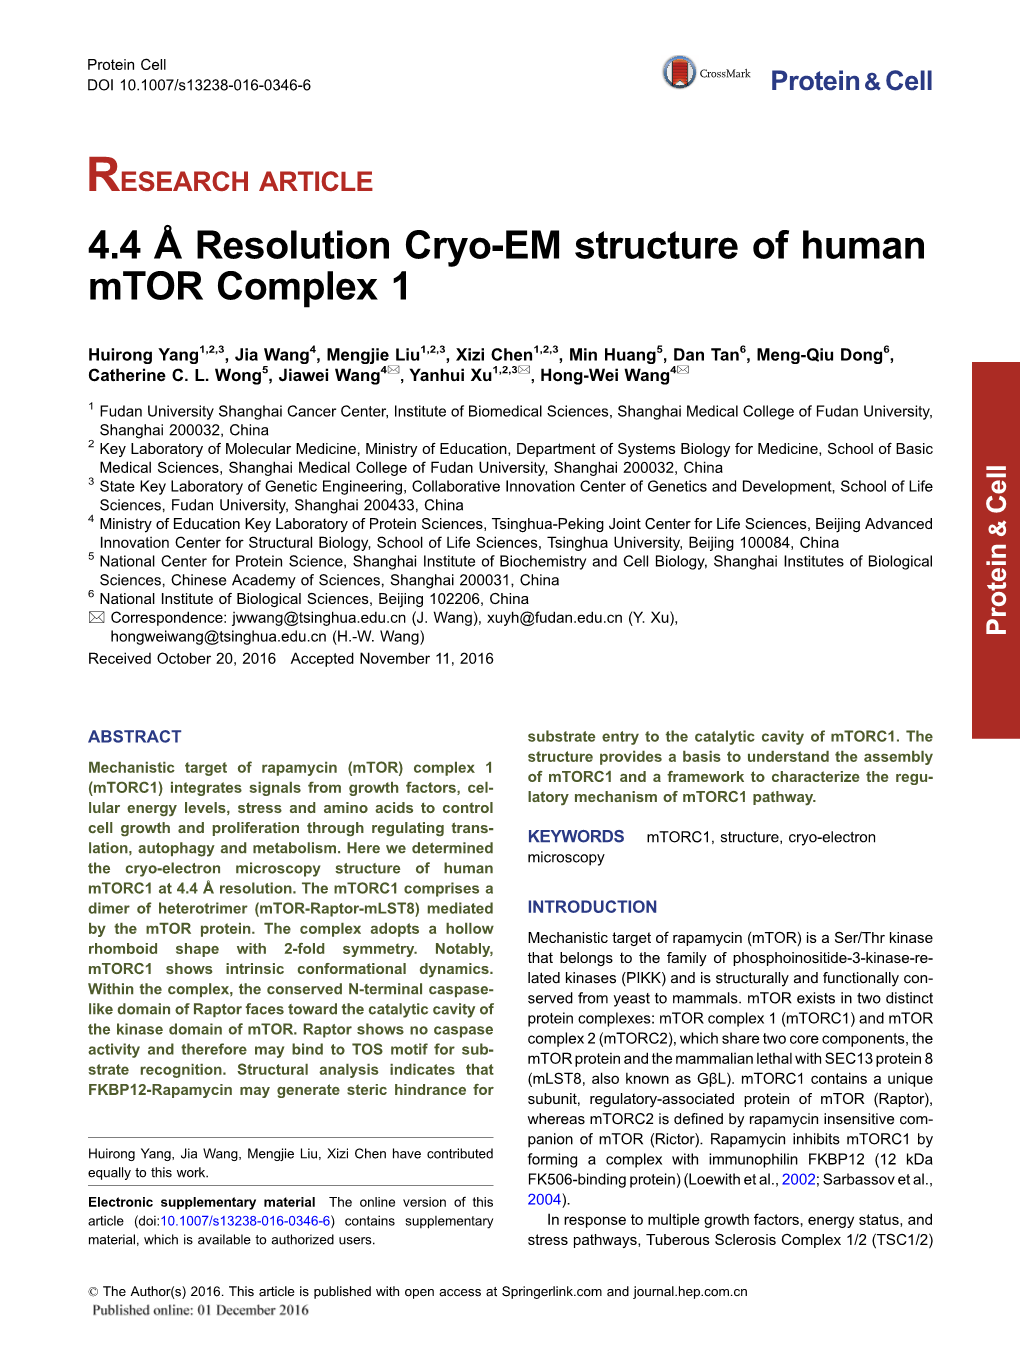 4.4 Å Resolution Cryo-EM Structure of Human Mtor Complex 1